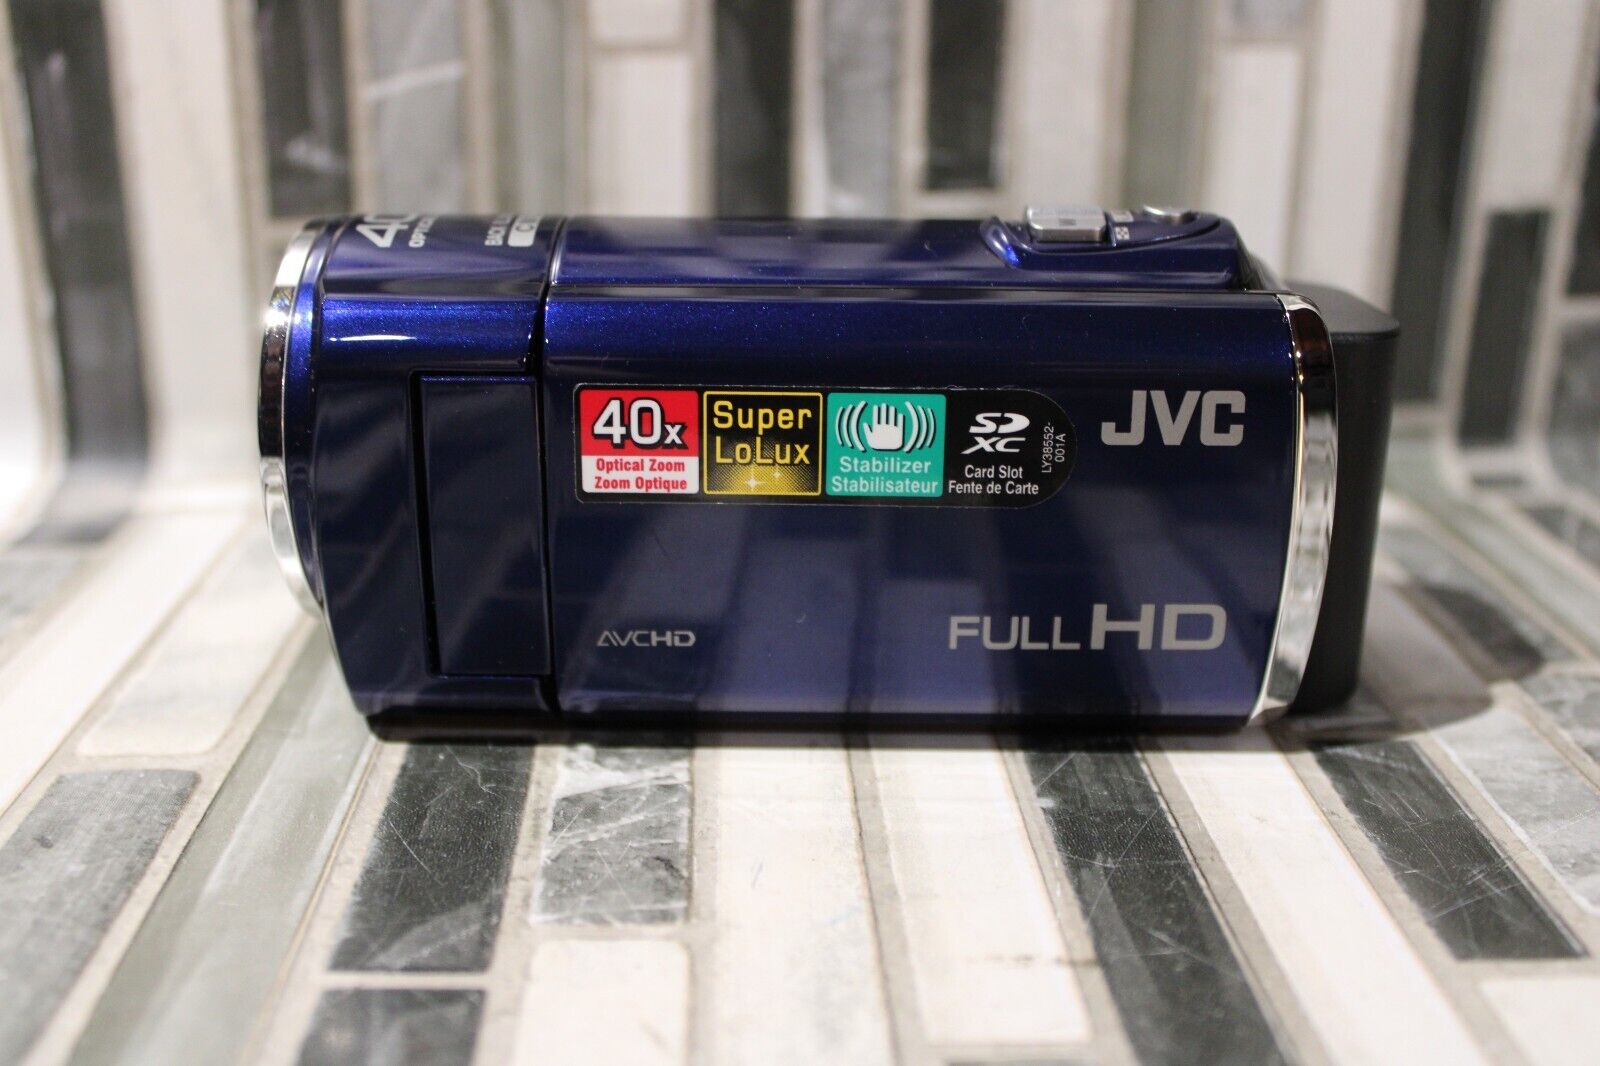 JVC+HD+Everio+GZ-E300+Camcorder+-++Black for sale online | eBay